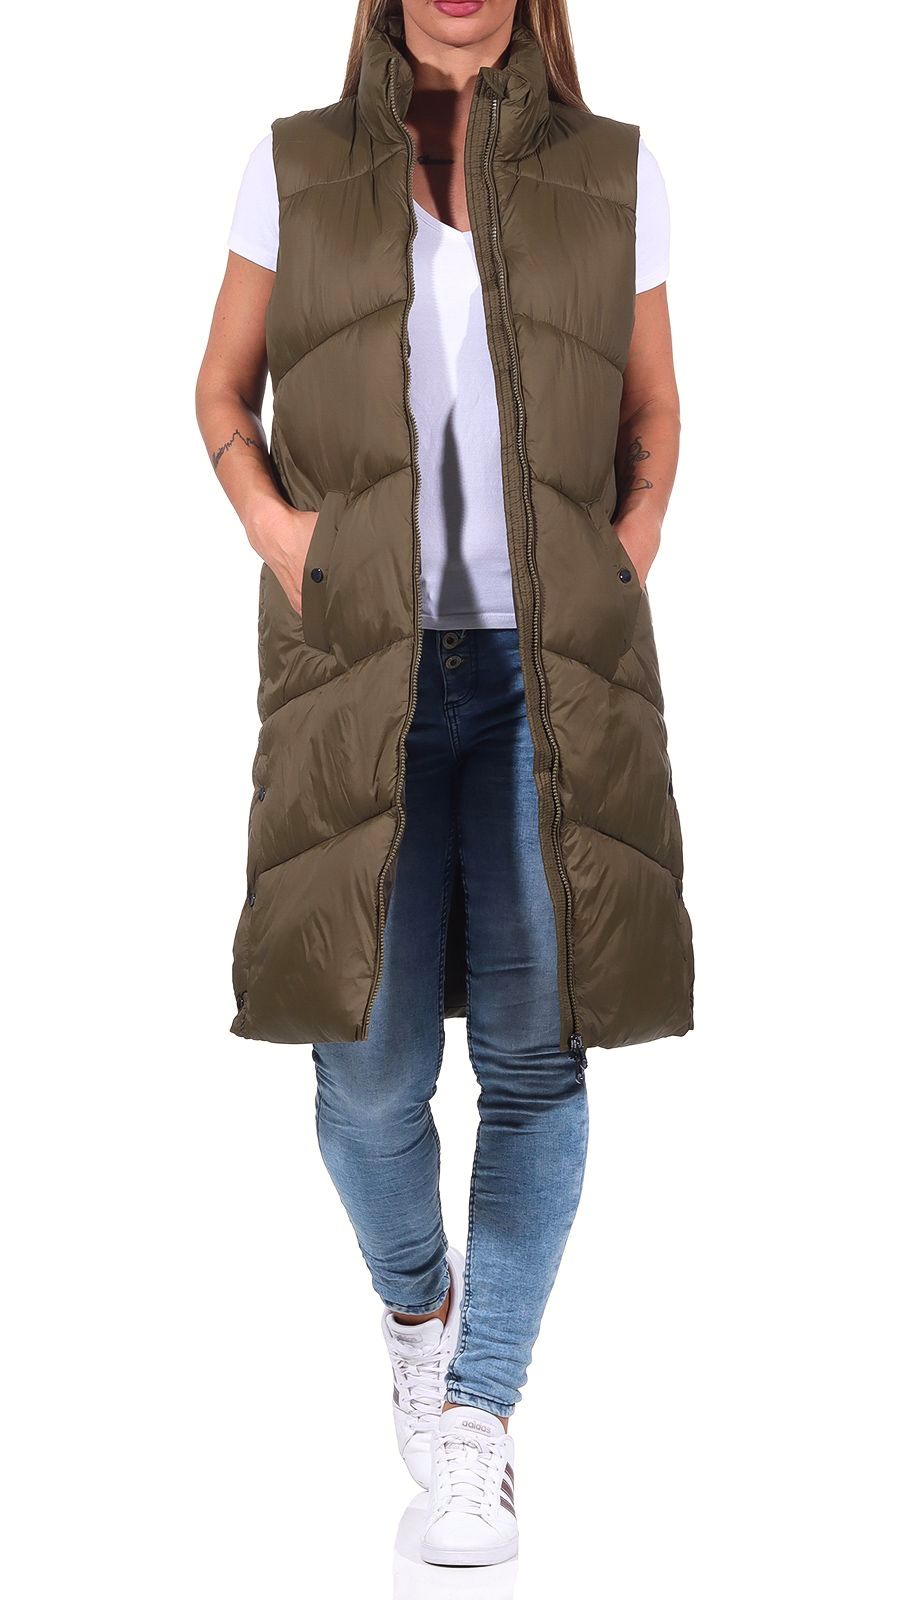 Vero Moda Damen lange Steppweste Weste Waistcoat gesteppt Übergang VMUppsala  | eBay